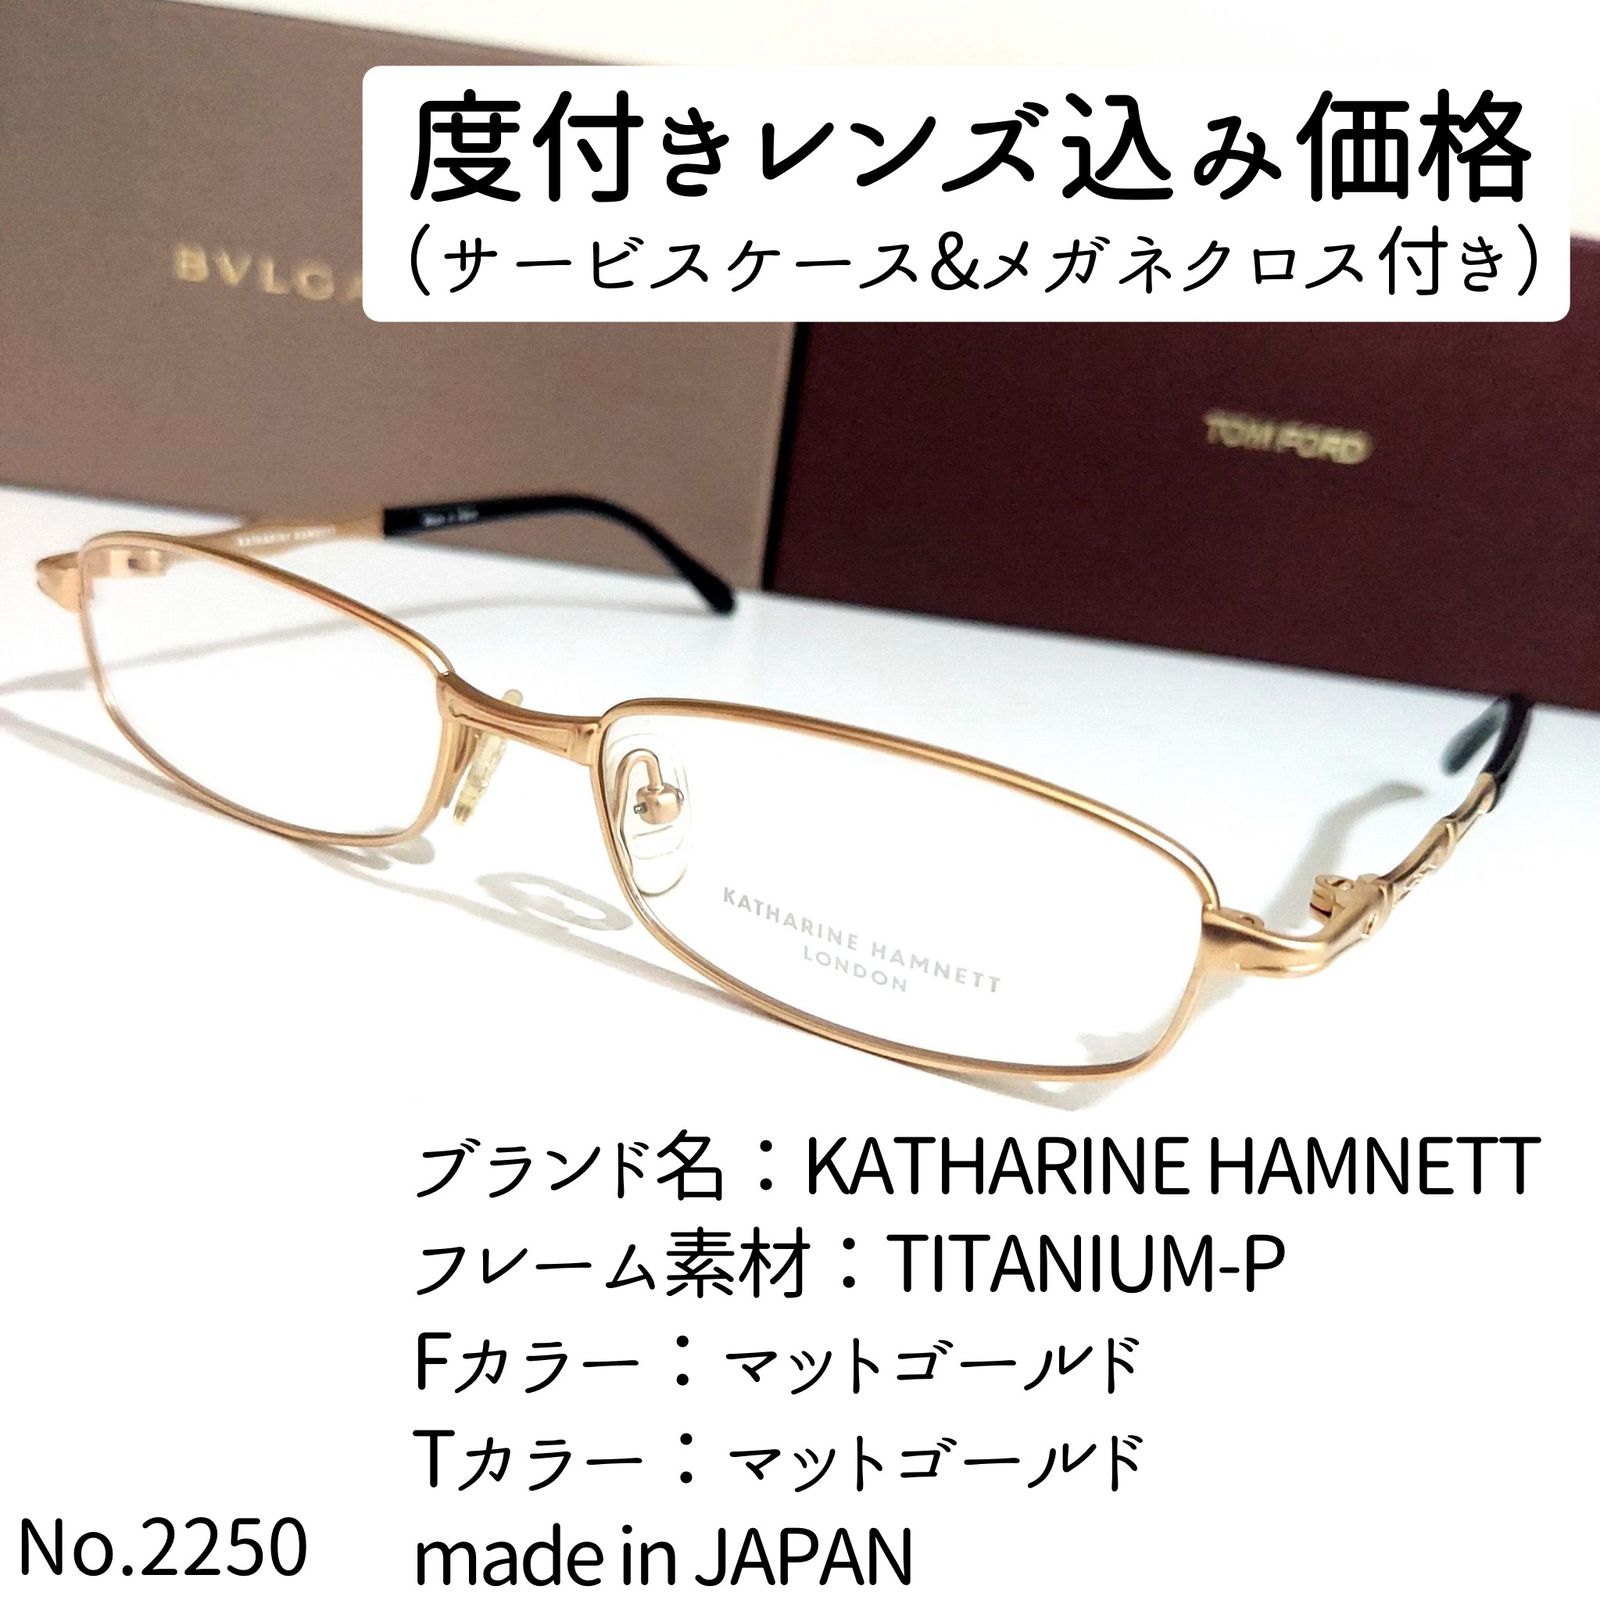 No.2250メガネ KATHARINE HAMNETT【度数入り込み価格】-